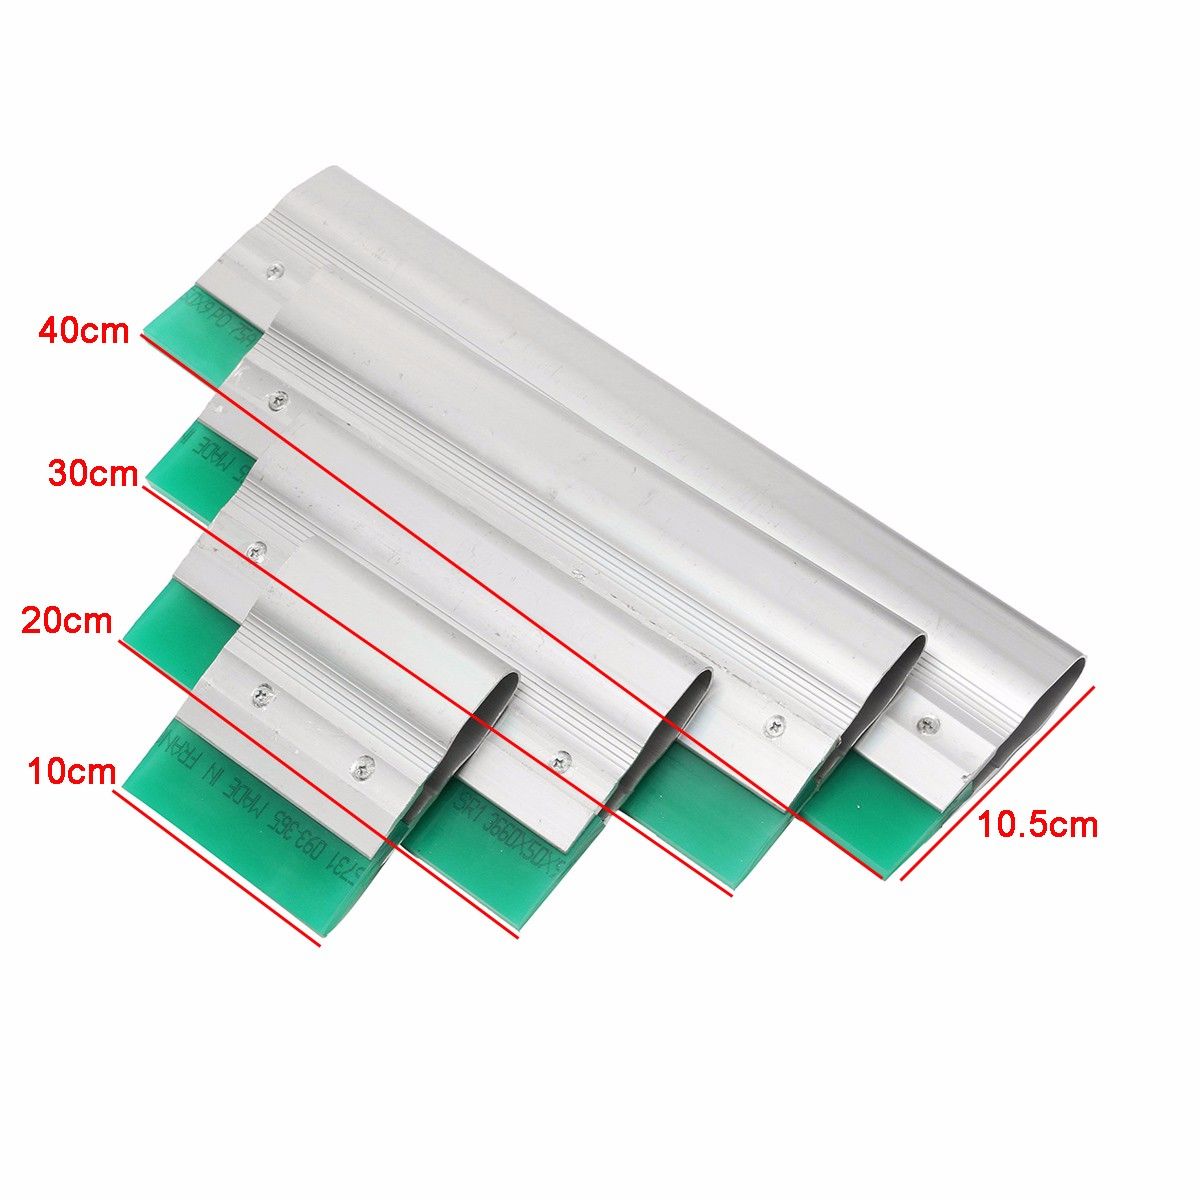 Aluminium-Screen-Printing-Squeegee-Blade-Ink-Scraper-Blade-Tool-10203040cm-1113704